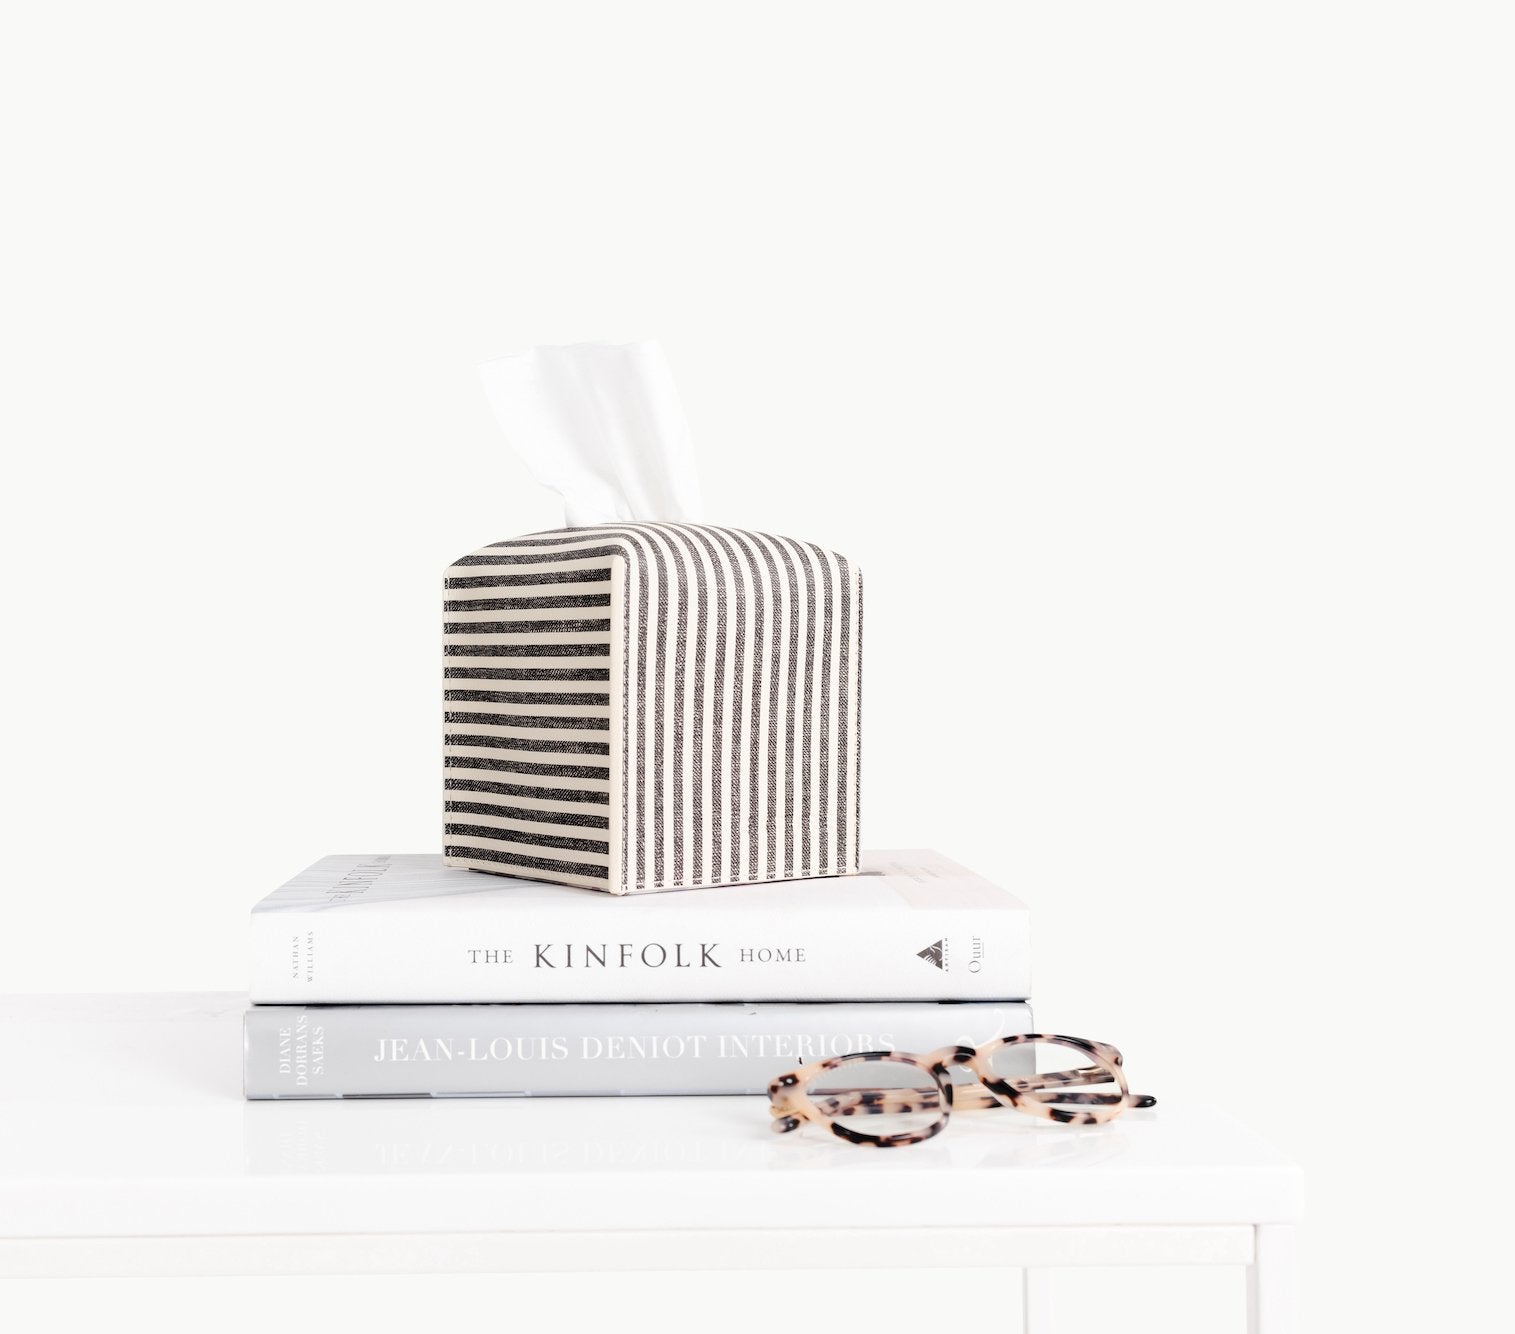 Stone Stripe@Stone Stripe Tissue Box Cover on table with books